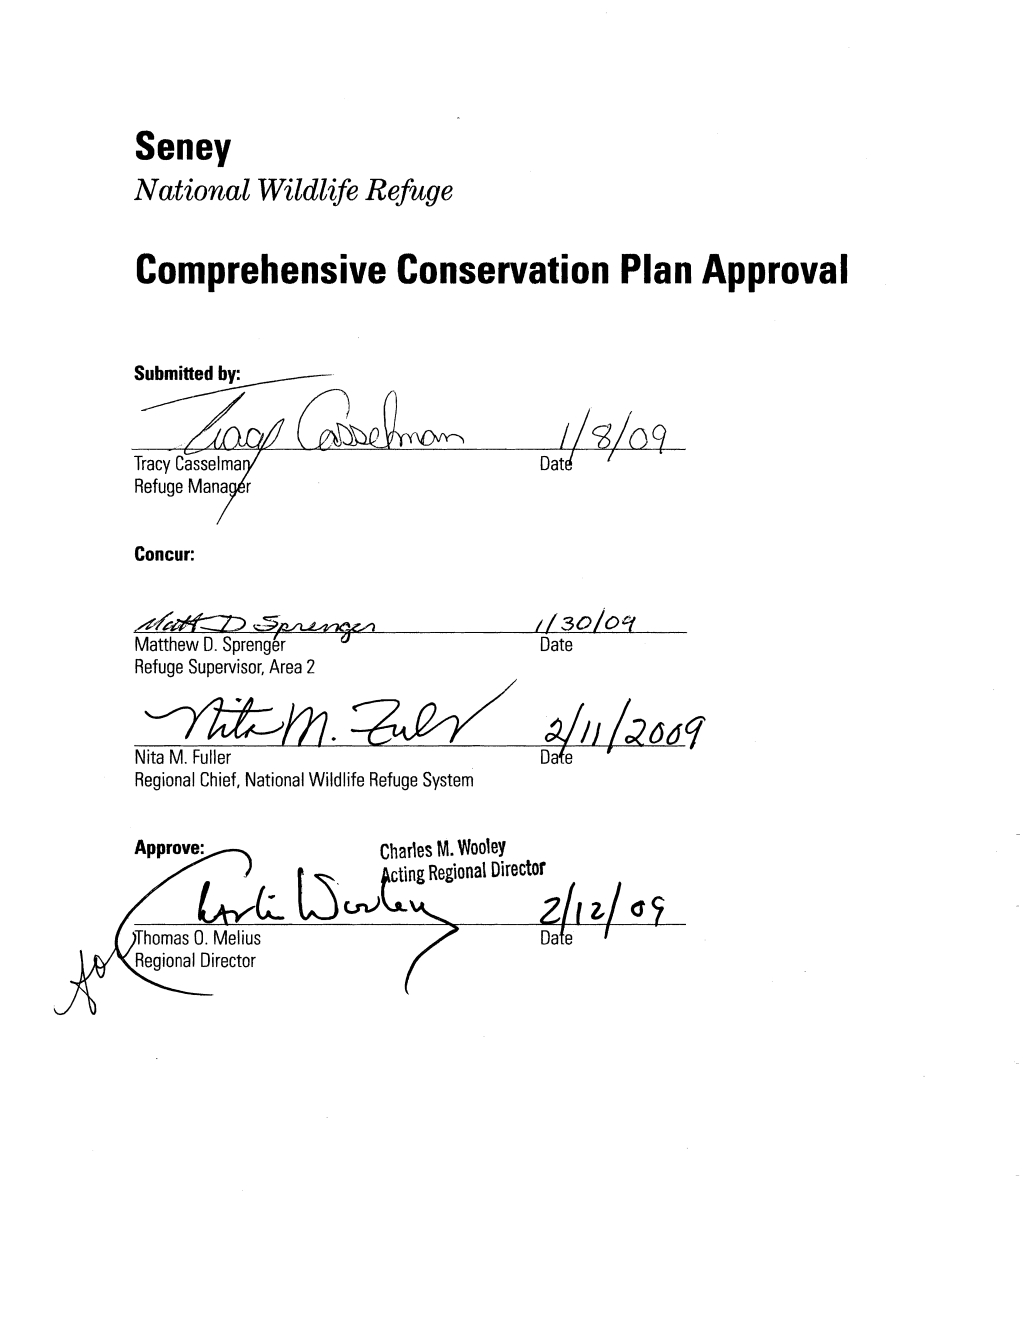 Seney Comprehensive Conservation Plan Approval